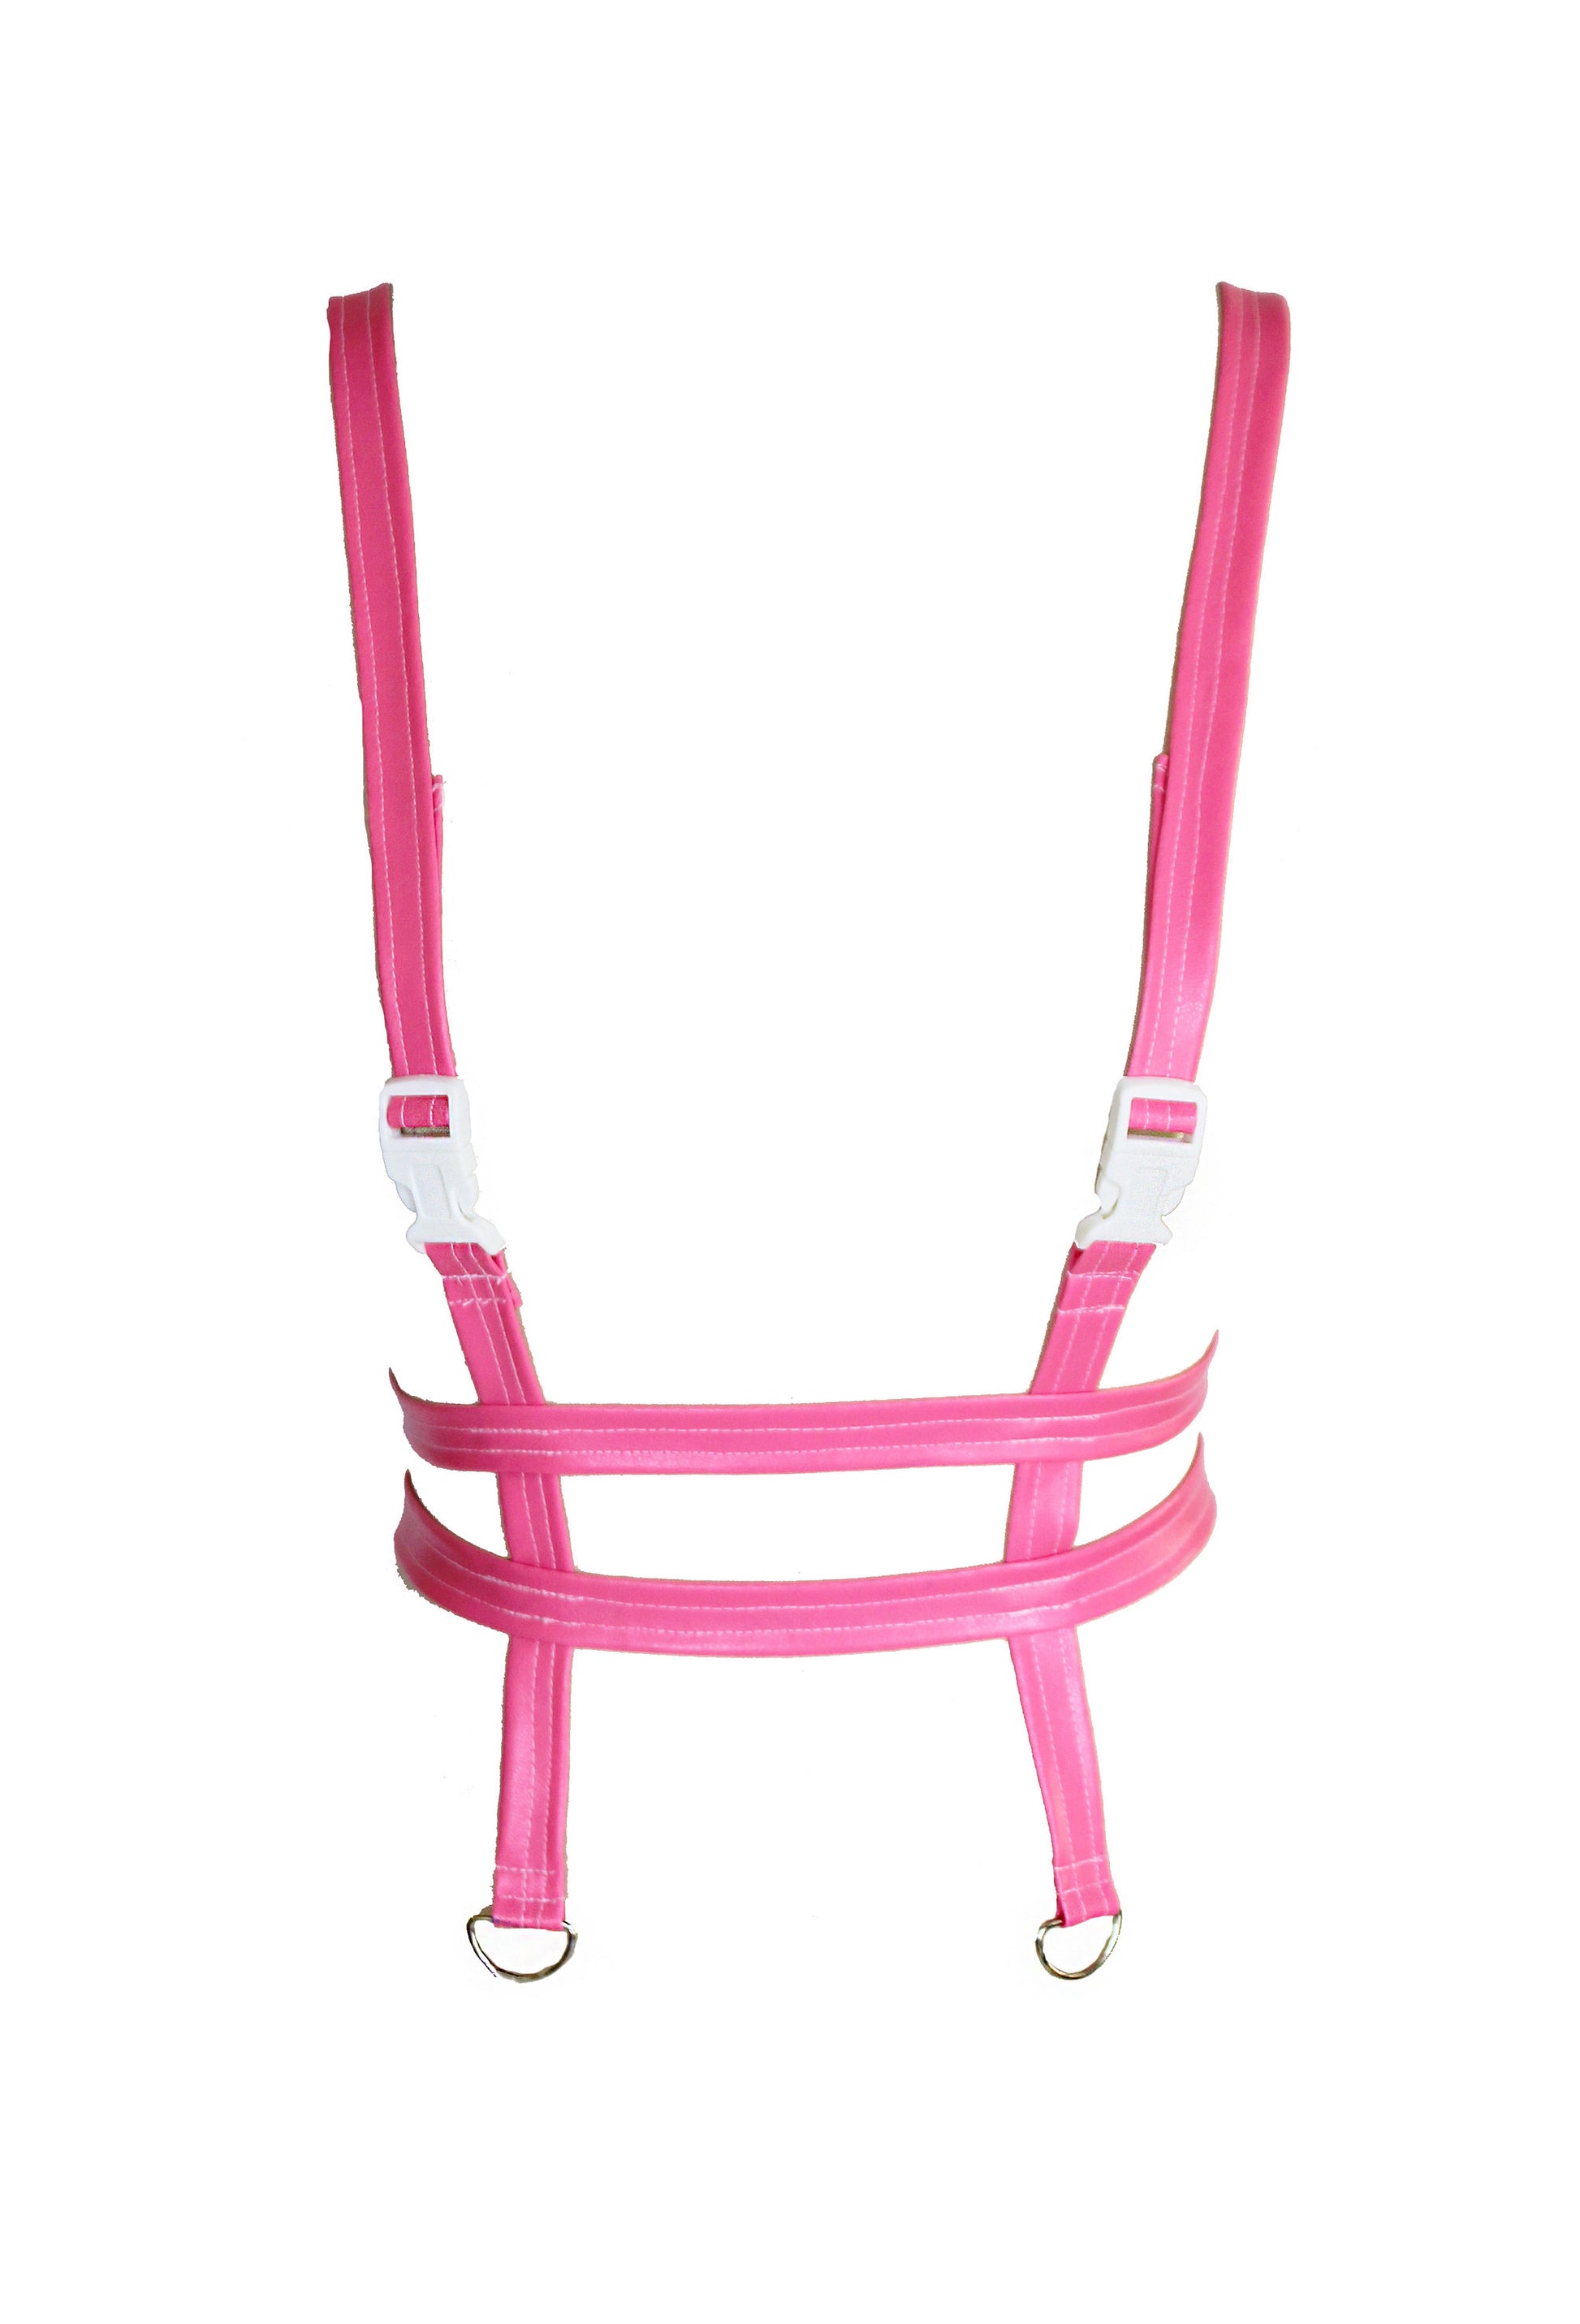 Made to Order - Body Harness Bra - Astarte - Pastel pink bra harness